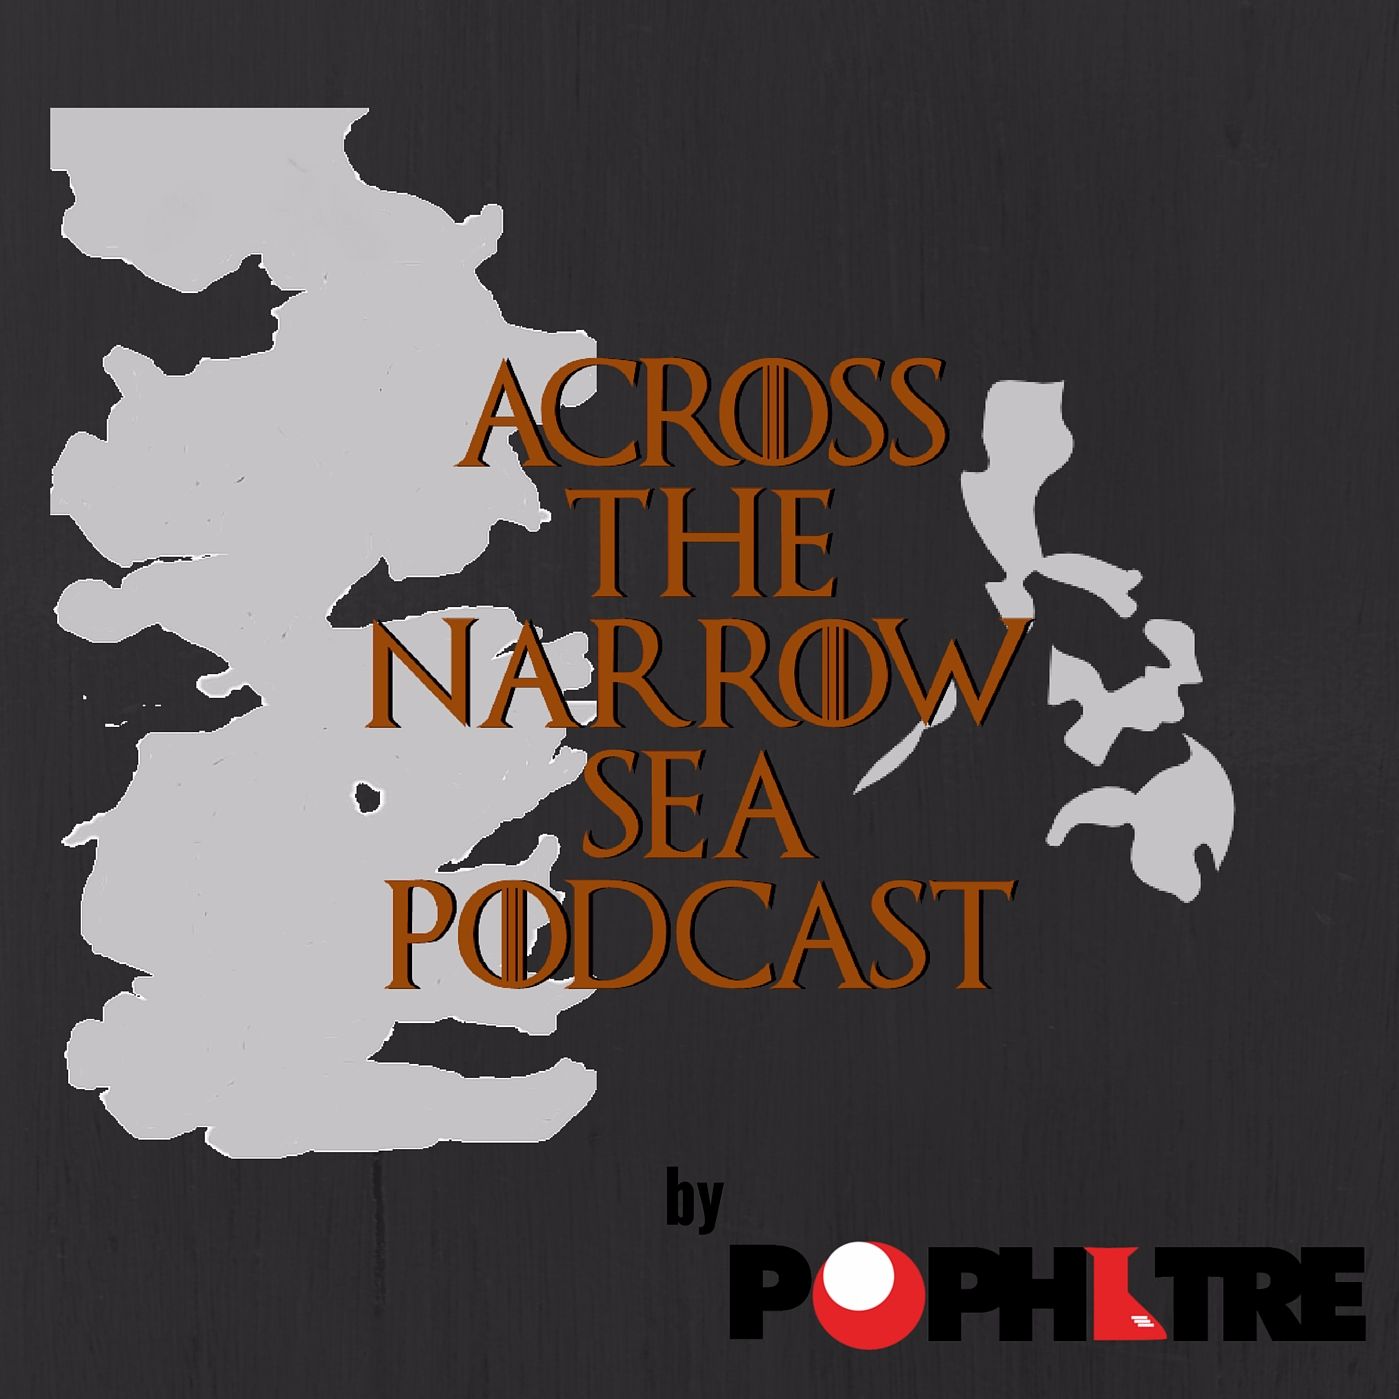 Across The Narrow Sea Podcast - 09 - No One